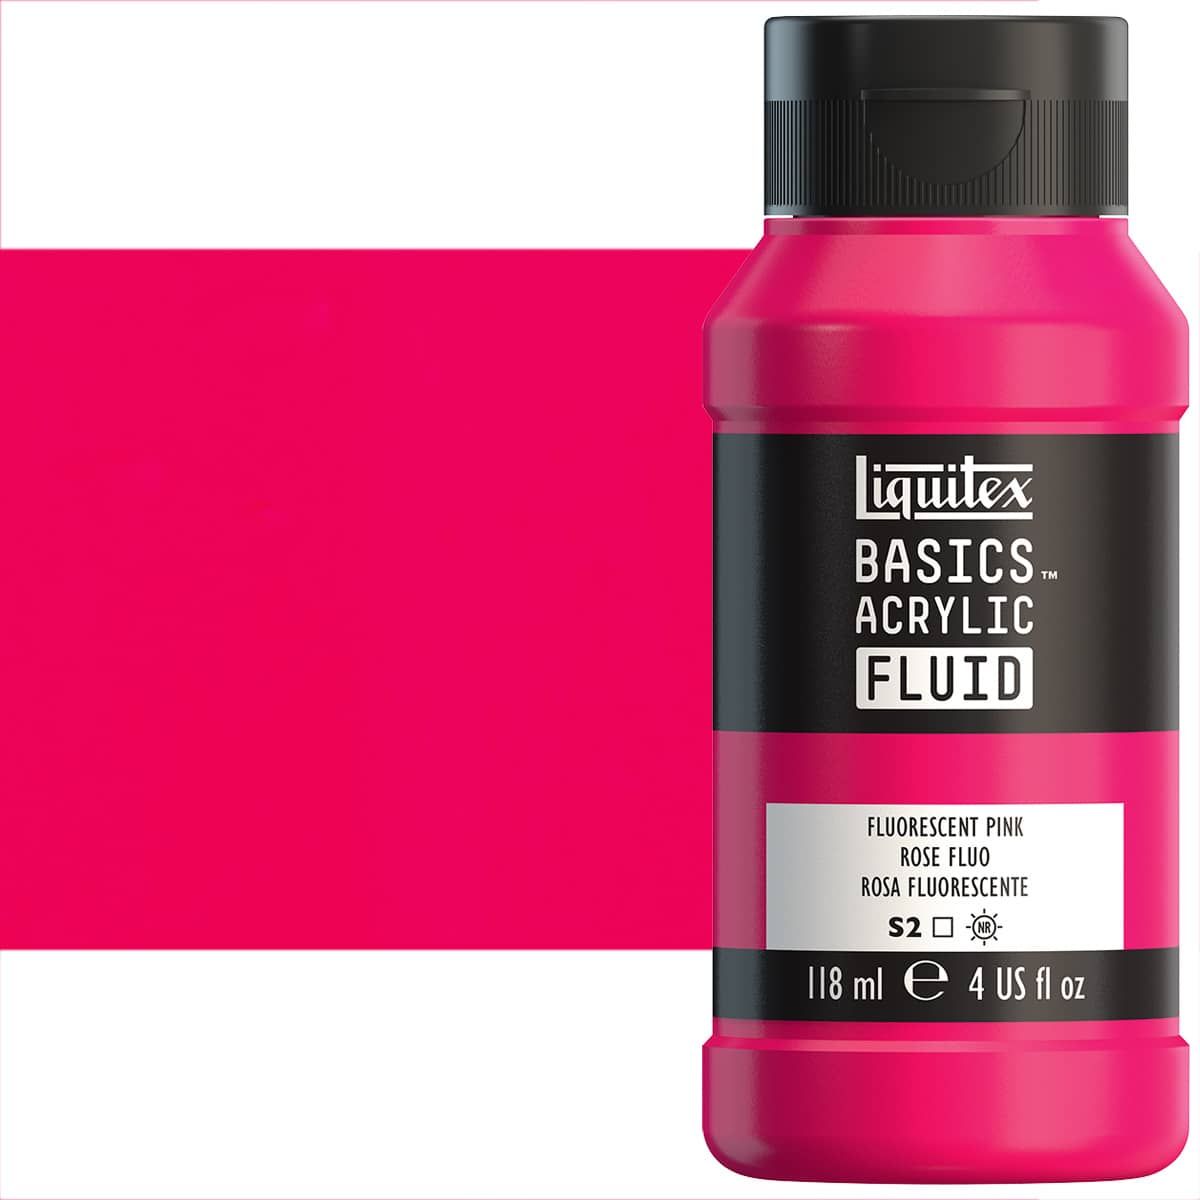 Liquitex Basics Fluid Acrylic - Fluorescent Pink, 4oz Bottle